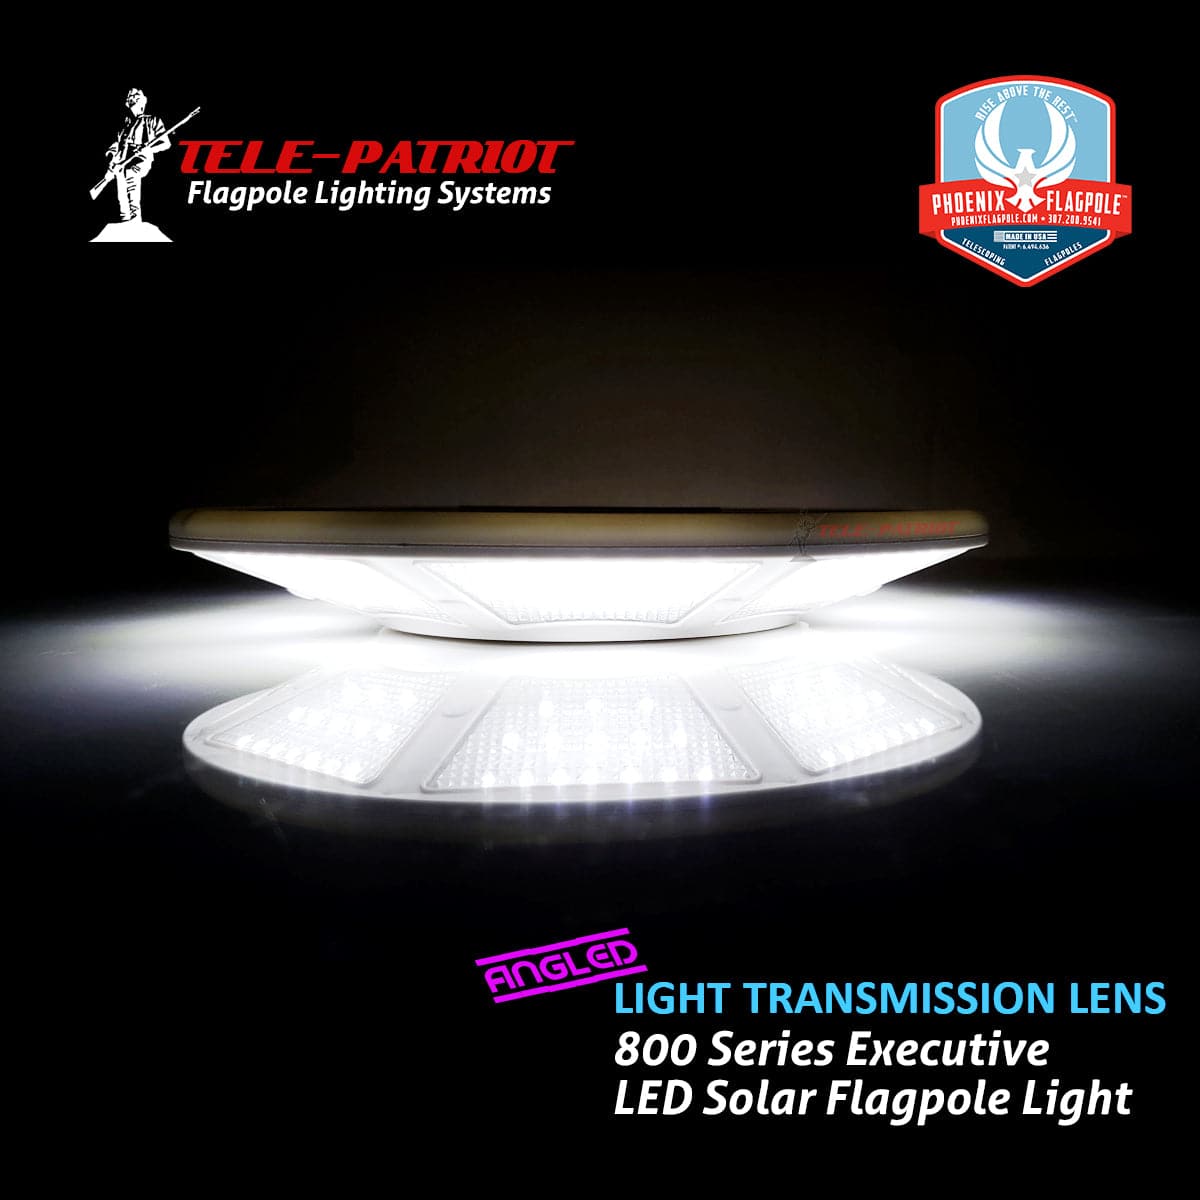 800 Series LED Solar Flagpole Light - Executive TelePatriot Phoenix Light System